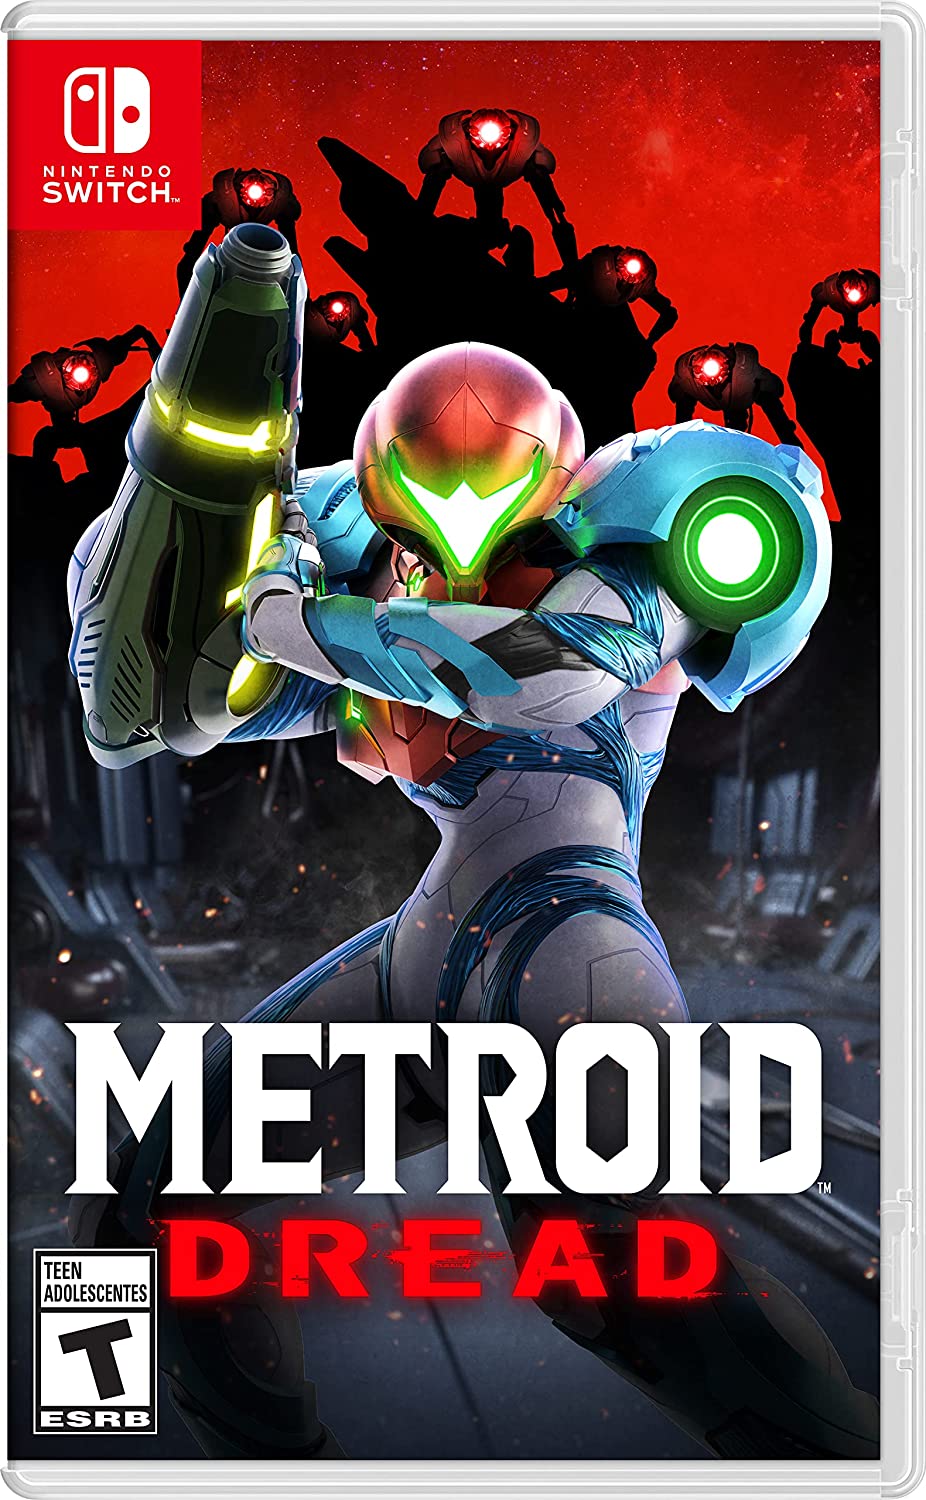 Metroid Dread game cover artwork.